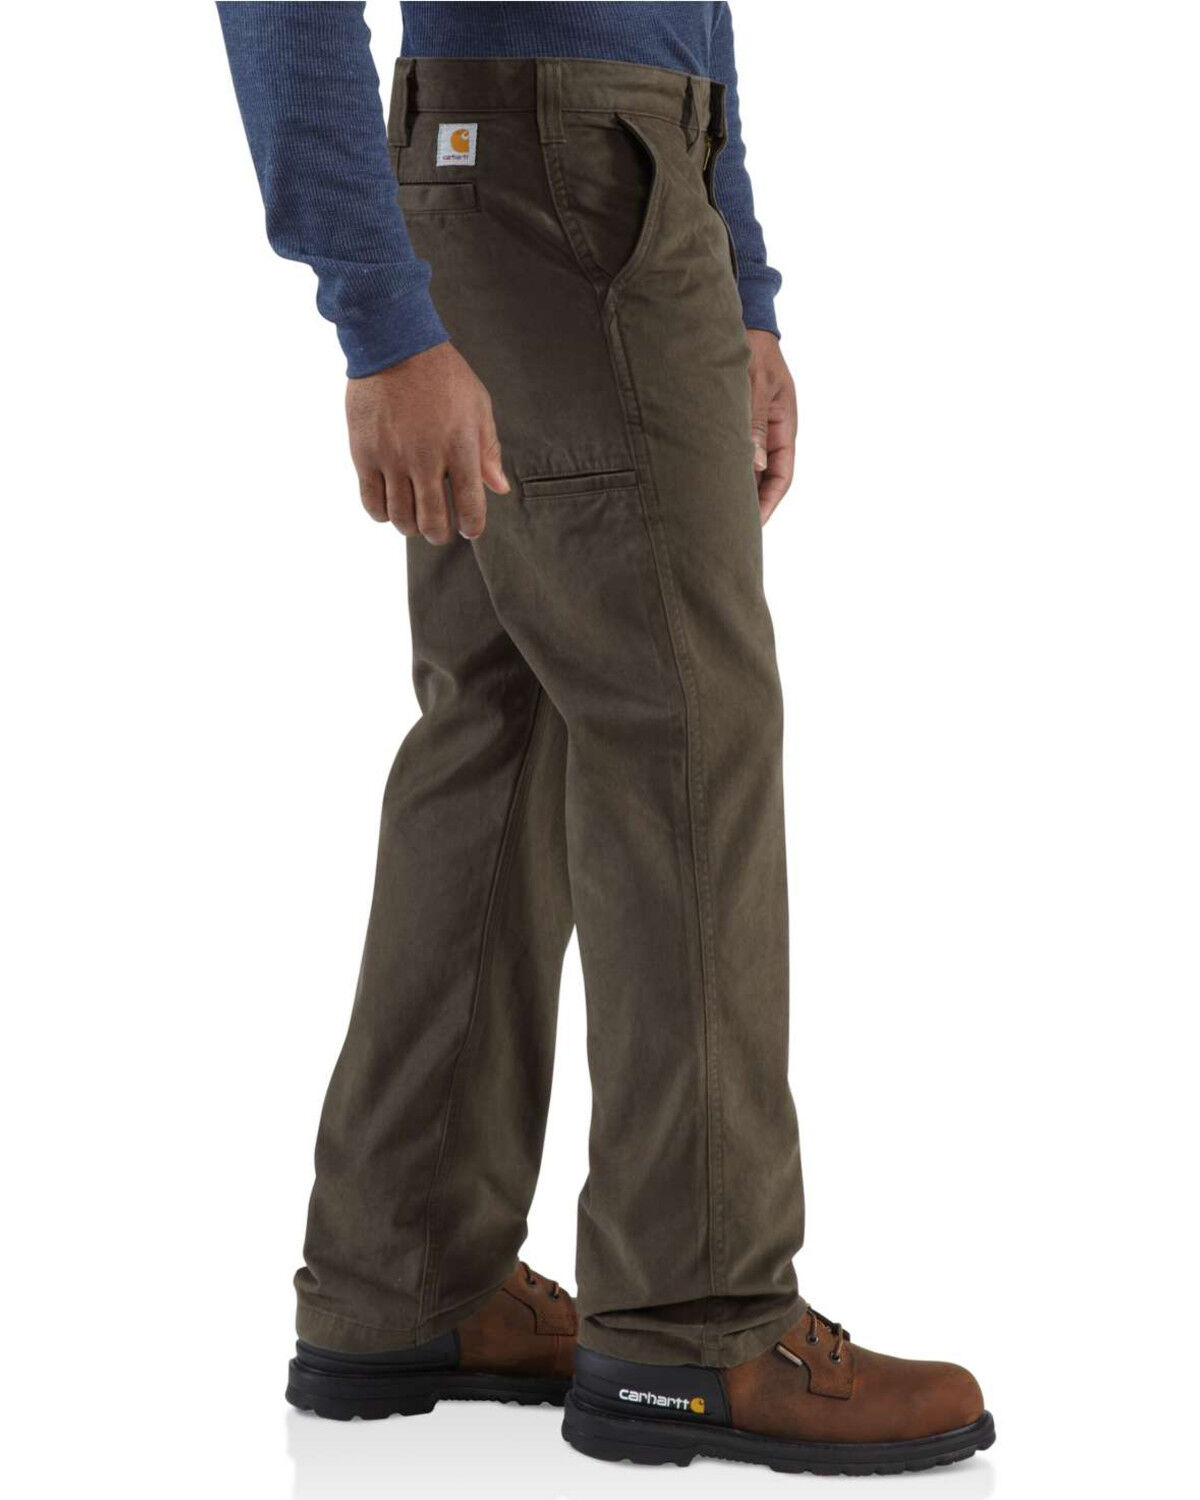 Carhartt Men's Khaki Rugged Work Pants 